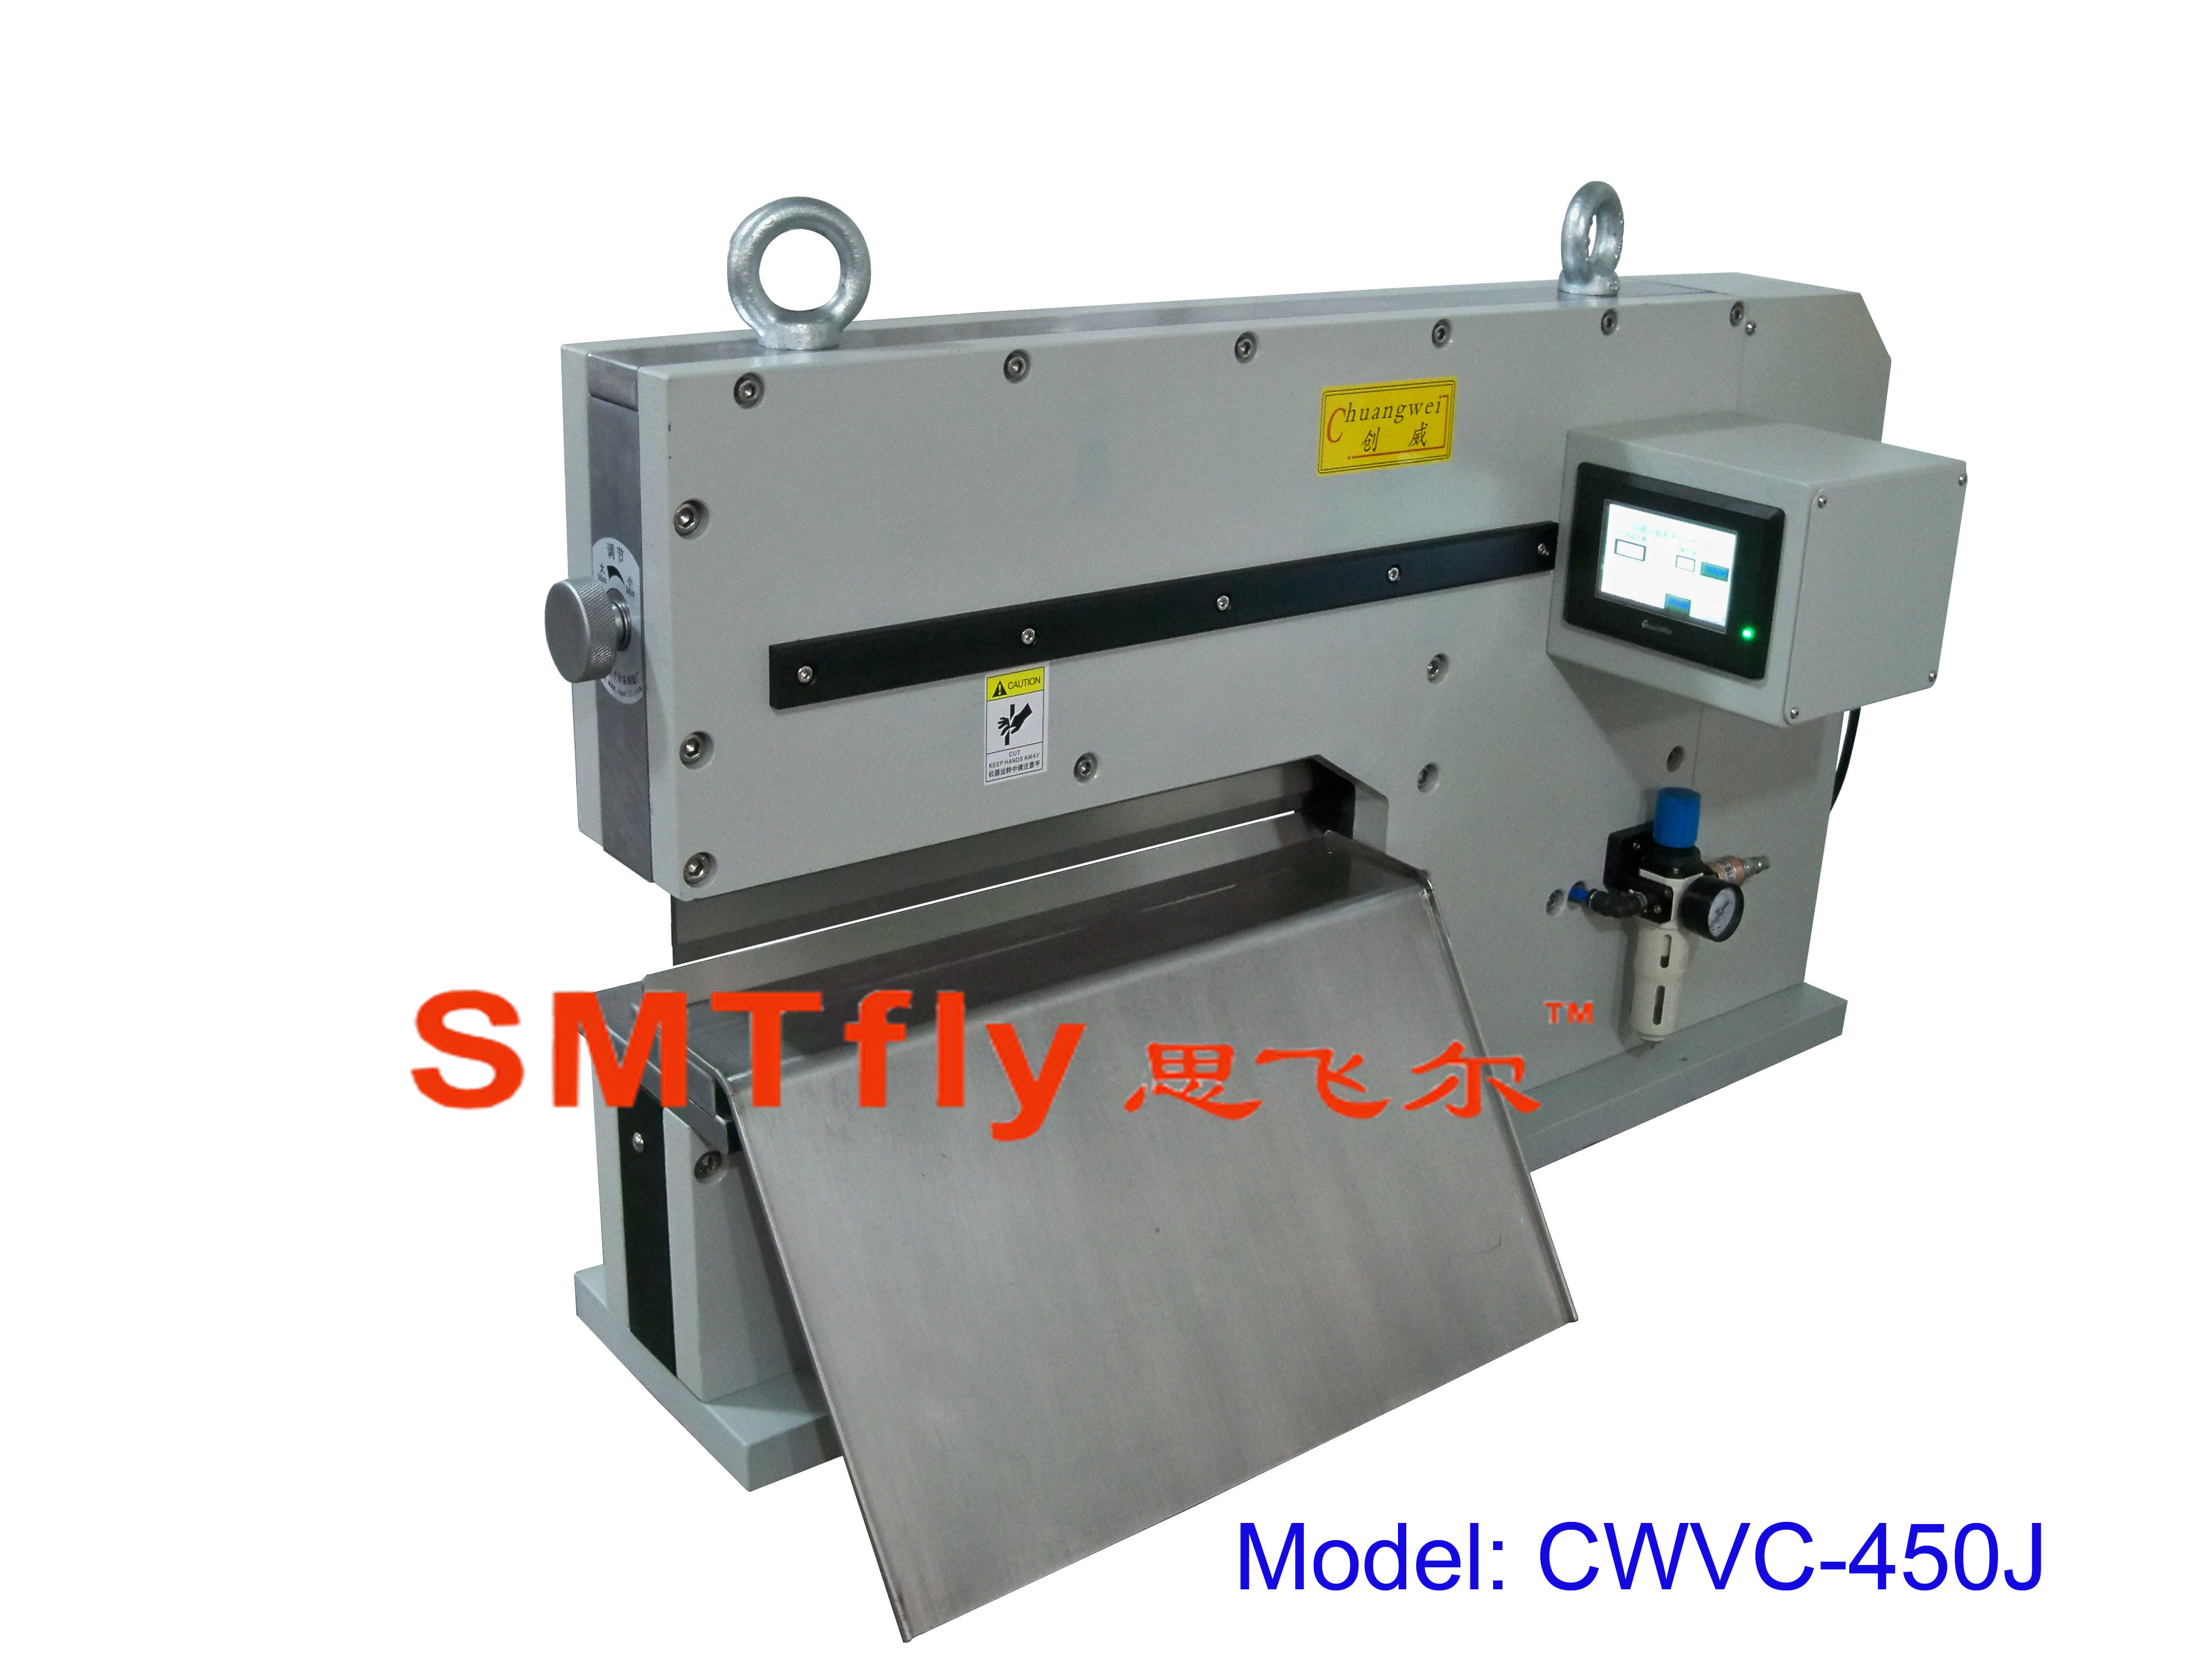 Electic PCB Depaneling,V-cut PCB Separator,SMTfly-450J